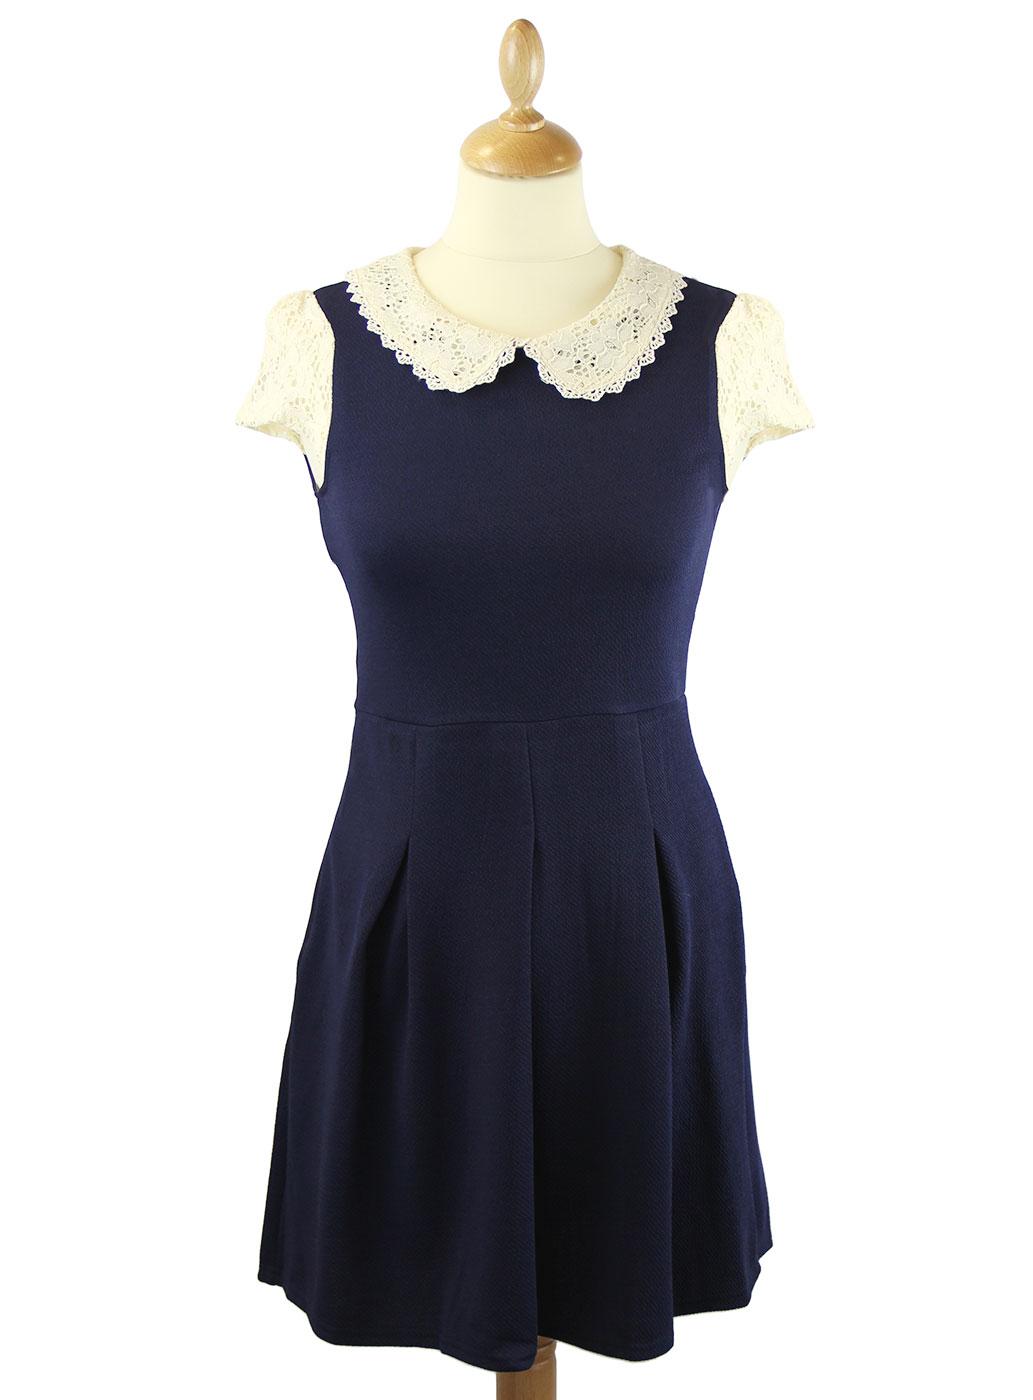 LOVESTRUCK Mary Retro 60s Mod Short Sleeve Lace Trim Dress Navy